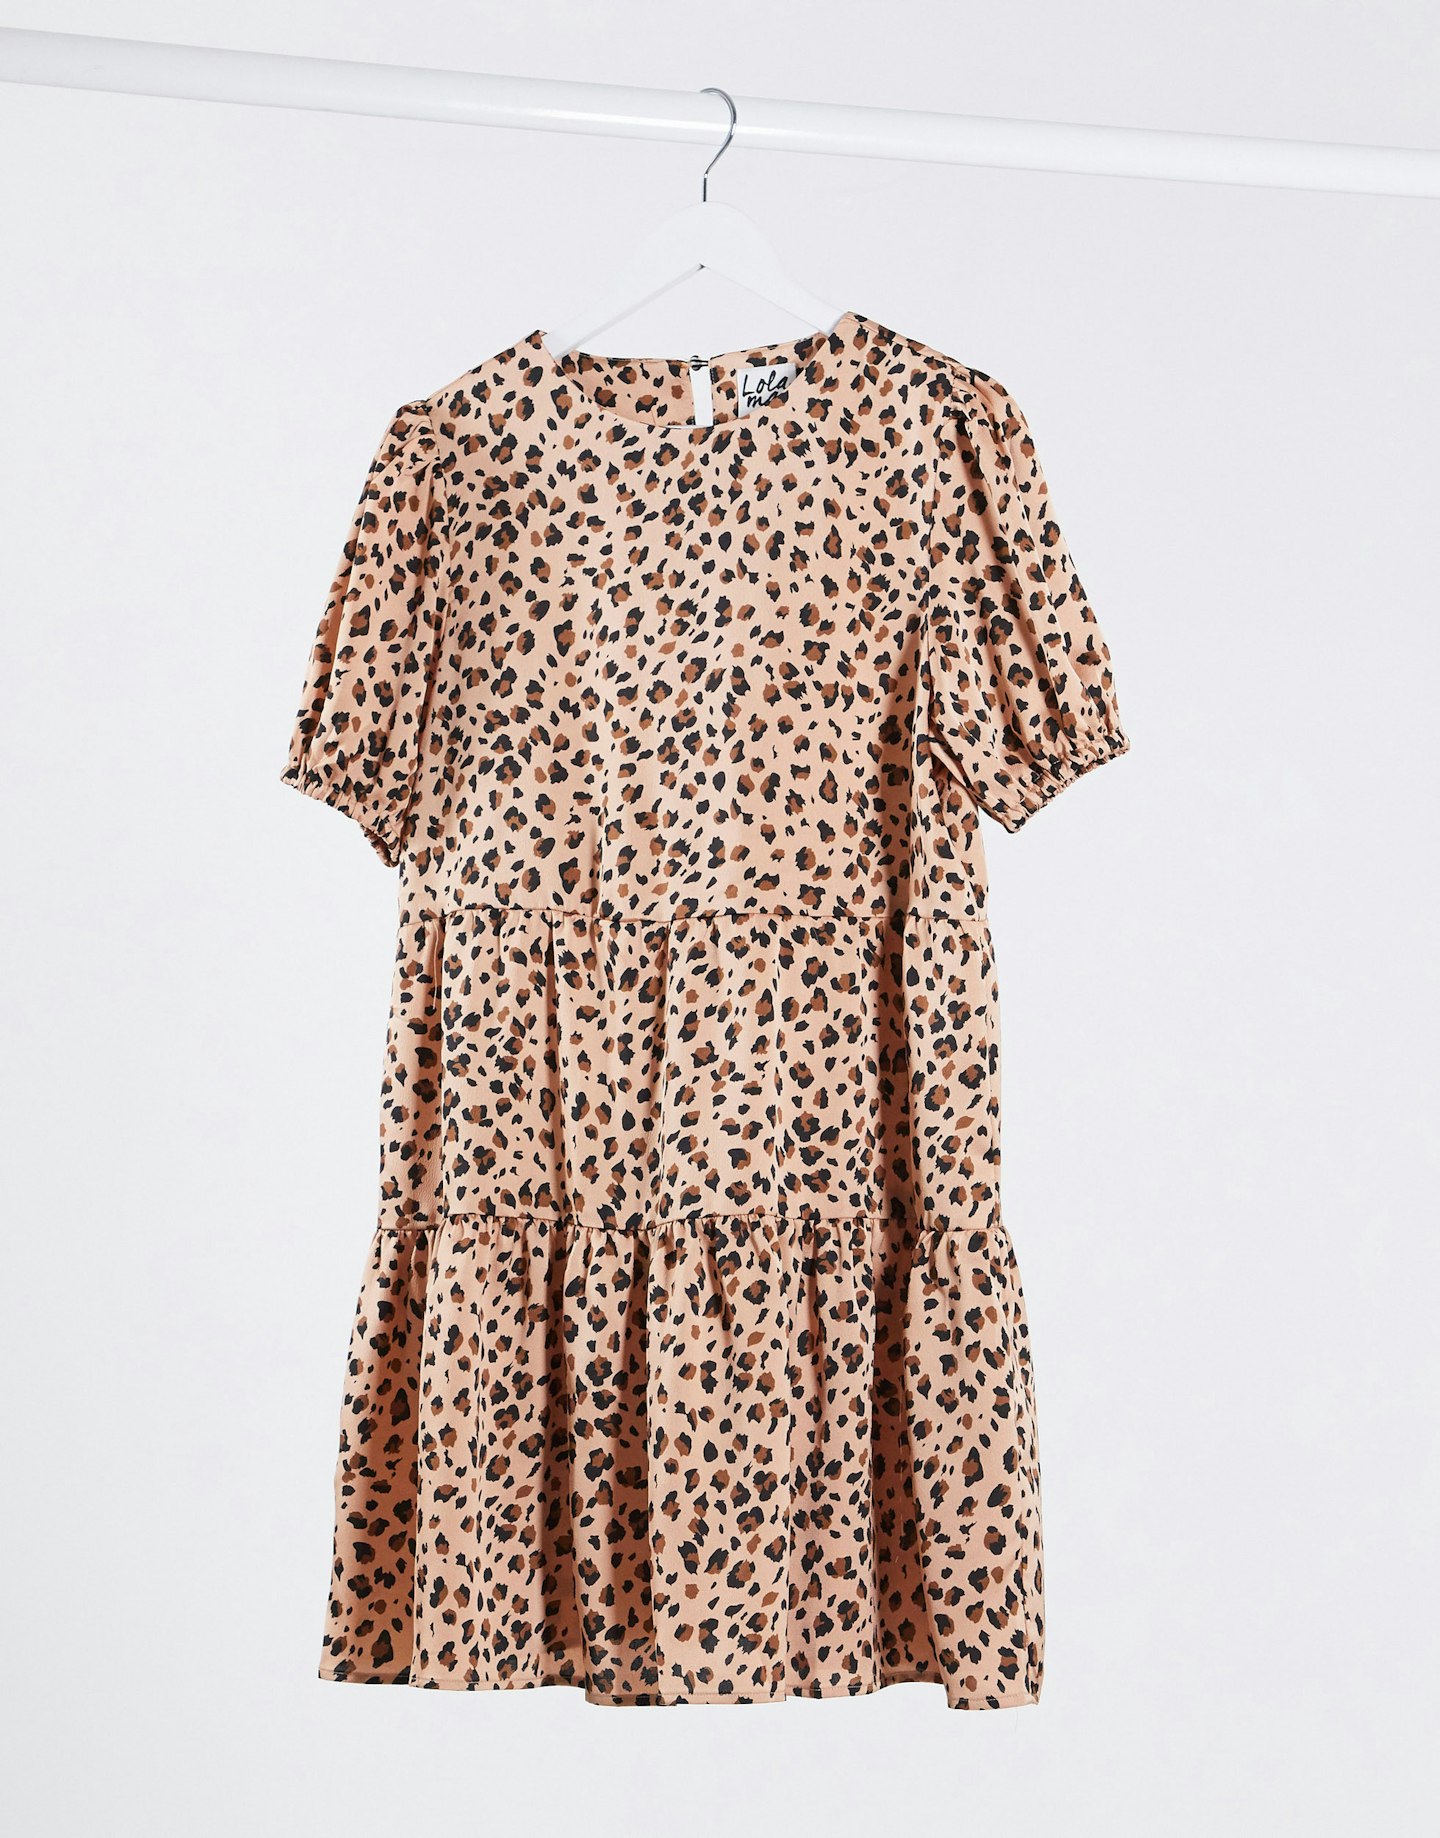 Lola May leopard smock dress